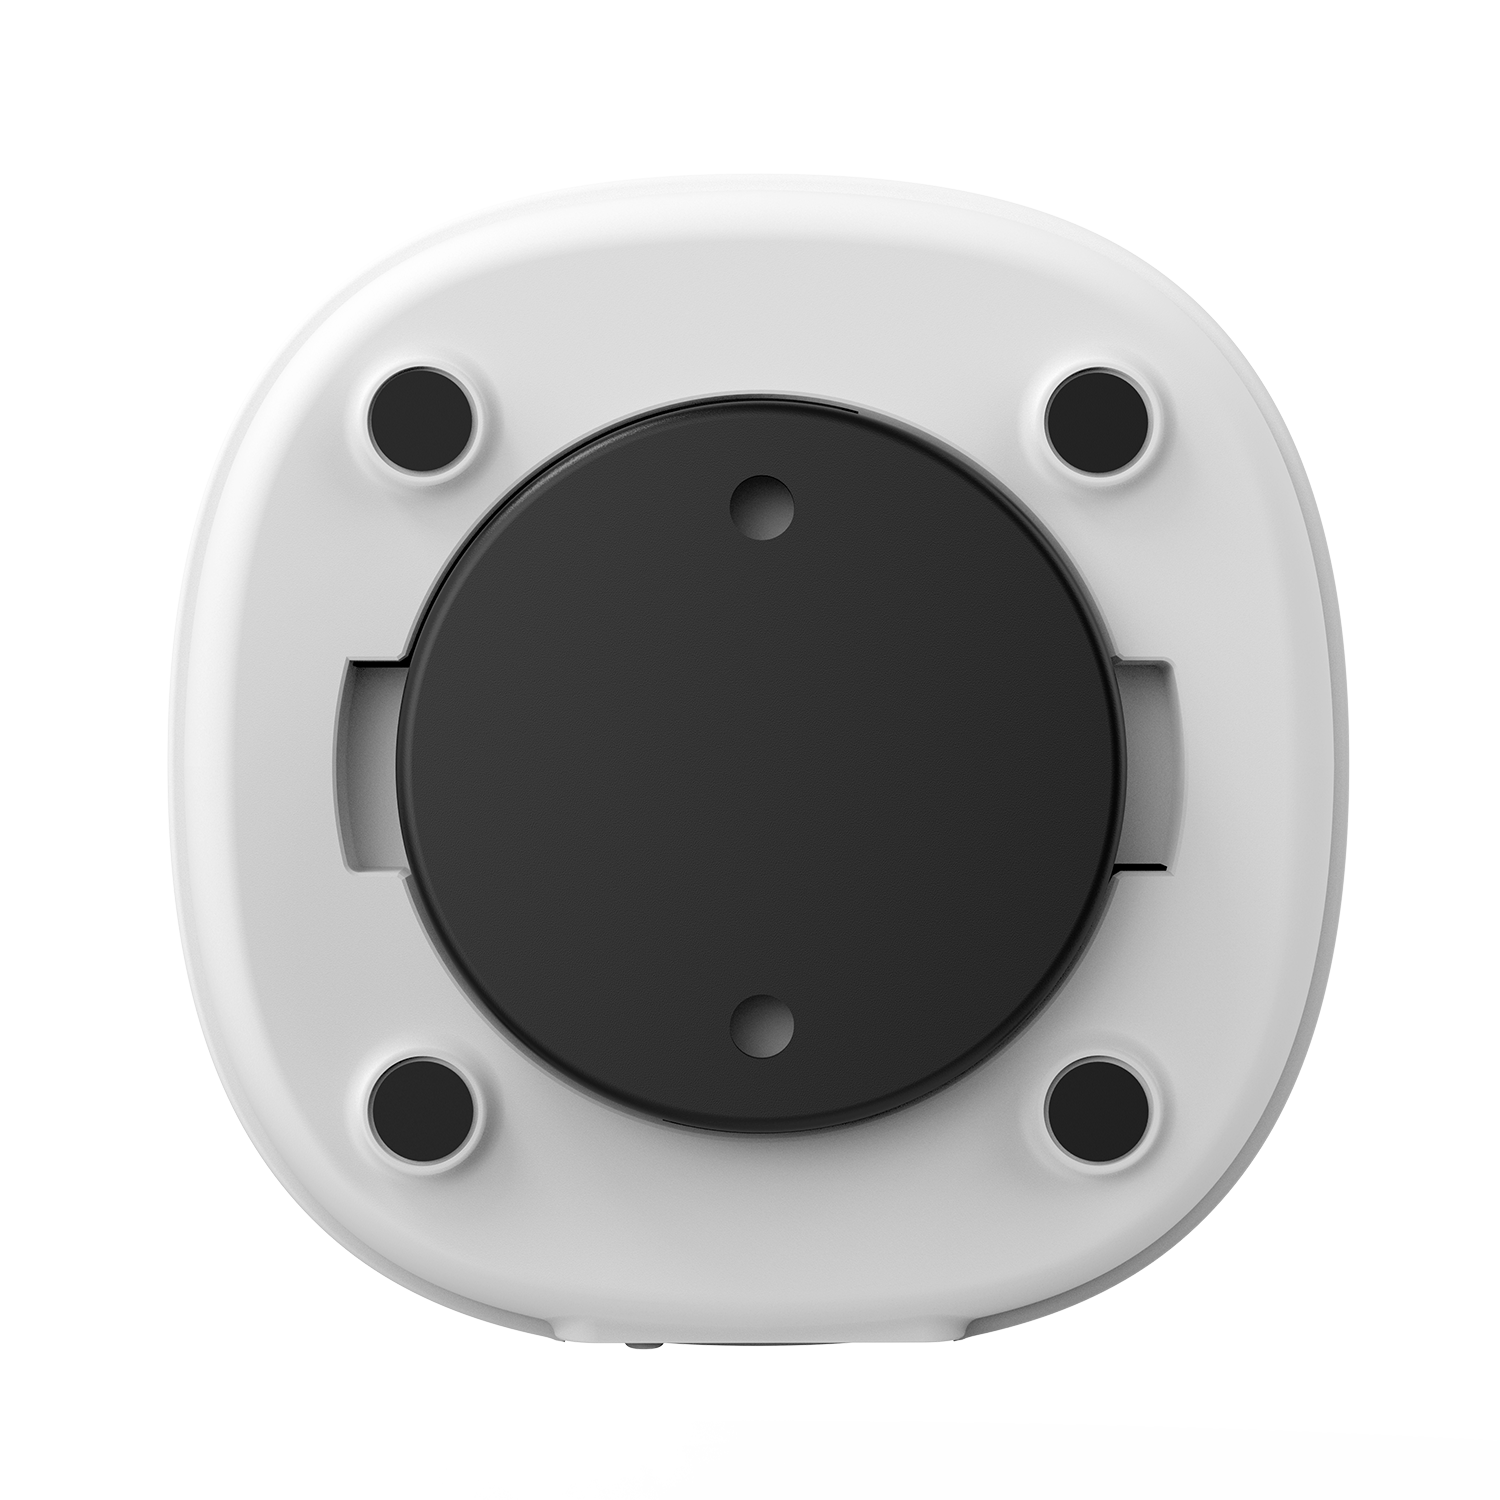 Momax Smart Eye 360° IP Camera